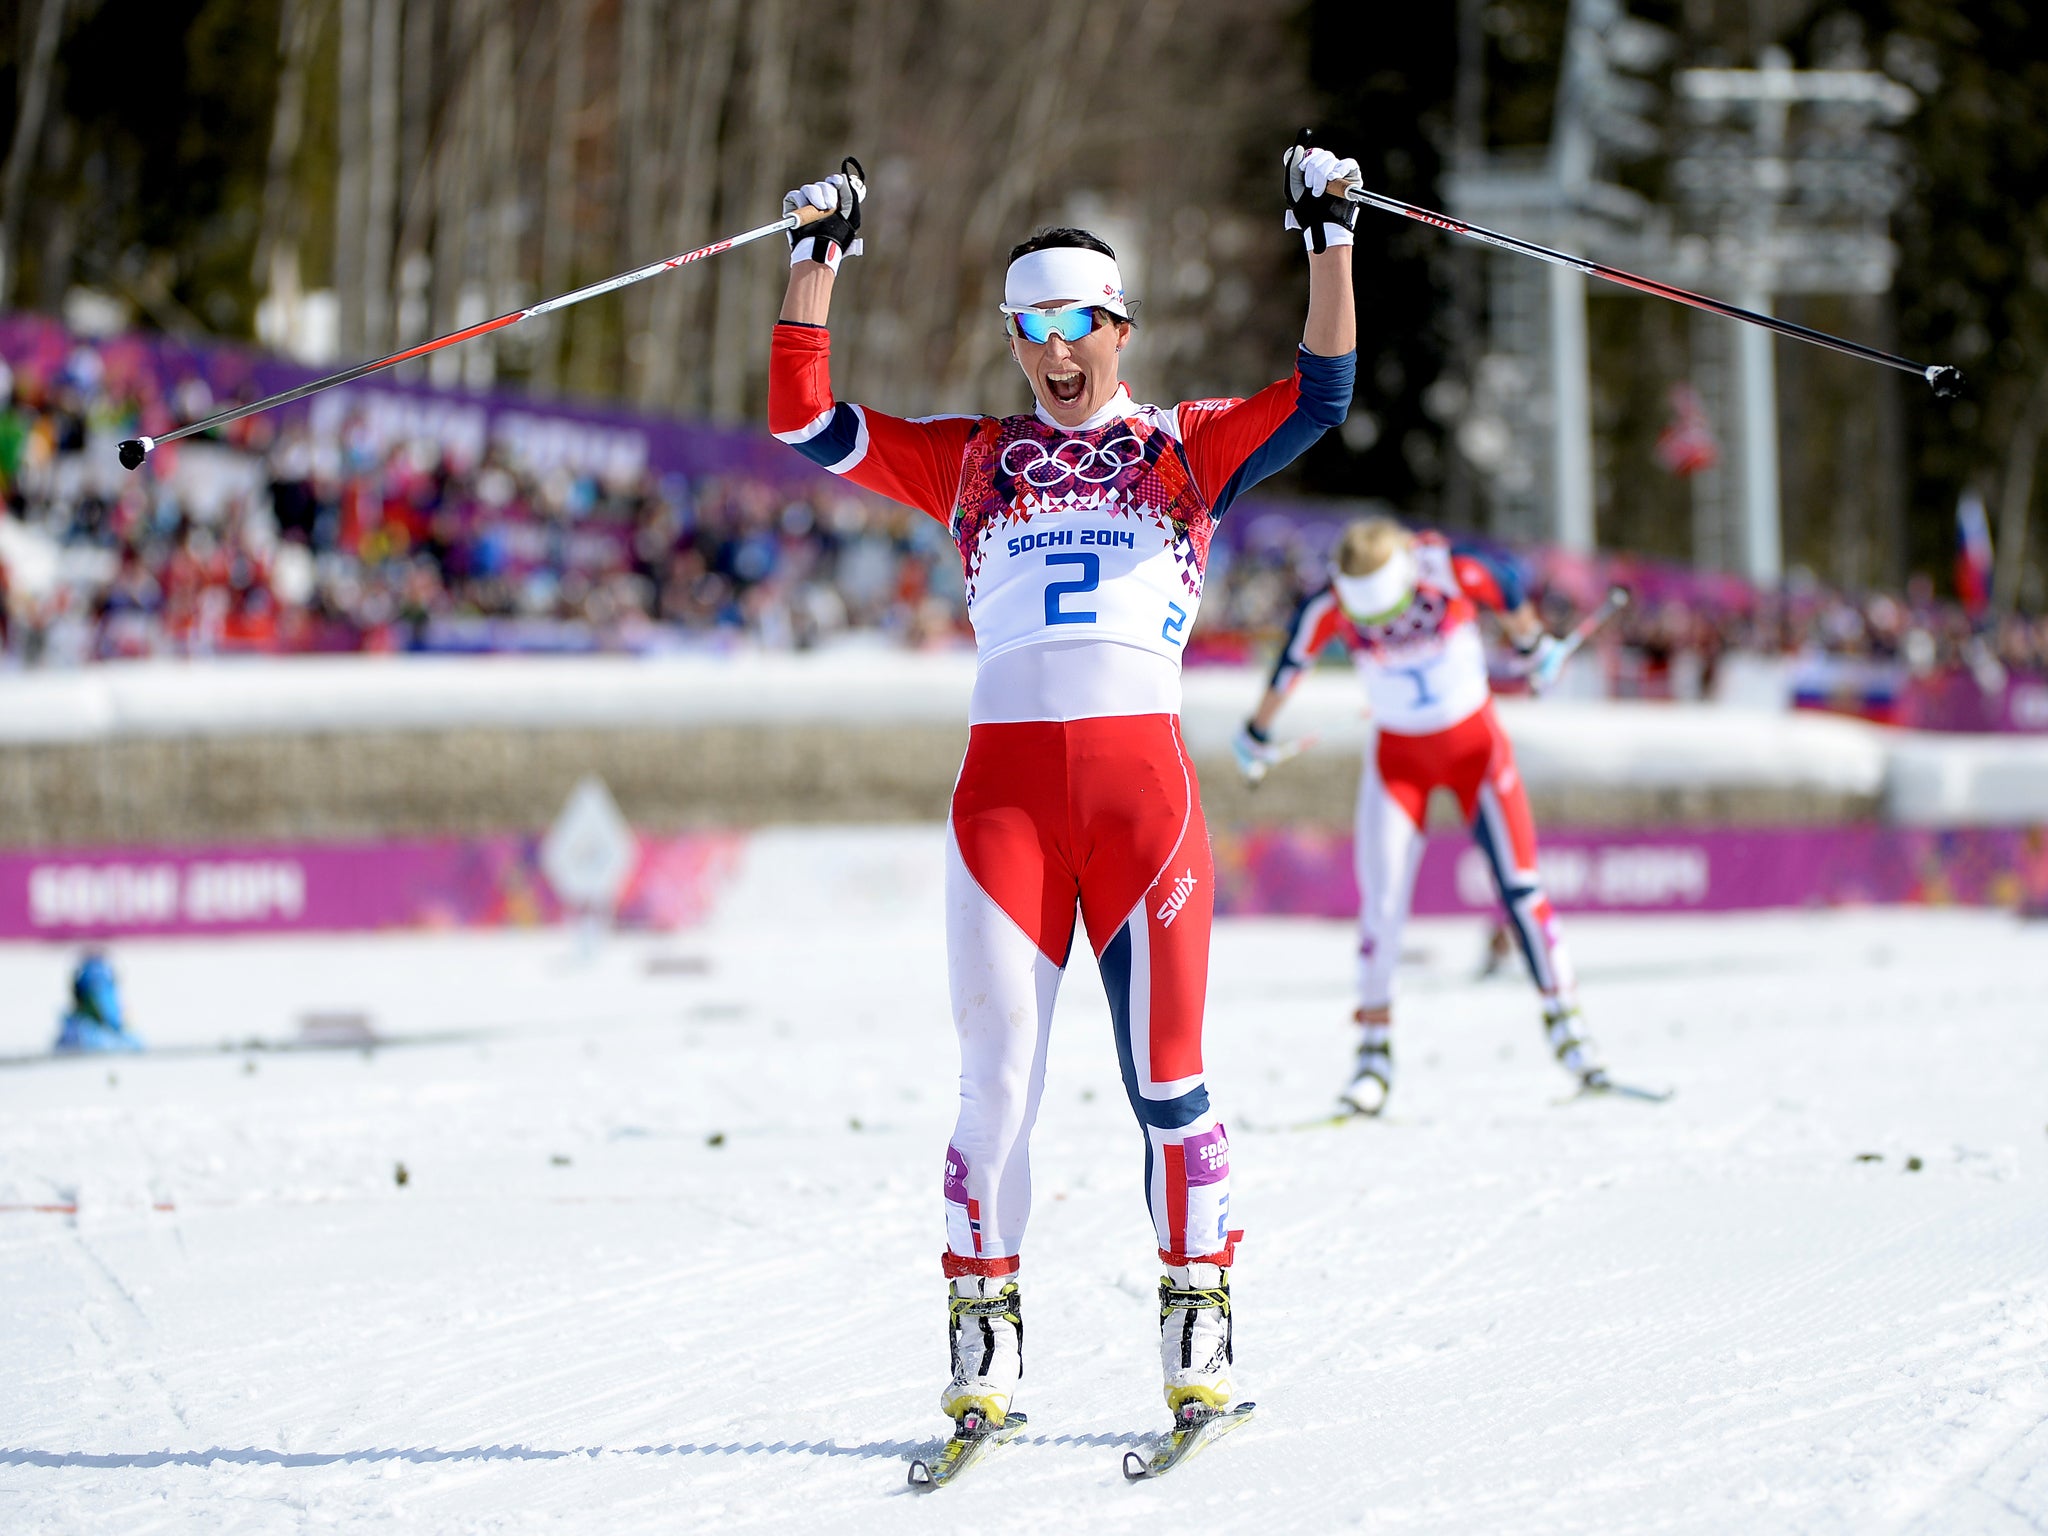 Norwegian cross-country skier Marit Bjoergen wins her third gold in Sochi in the 30km race